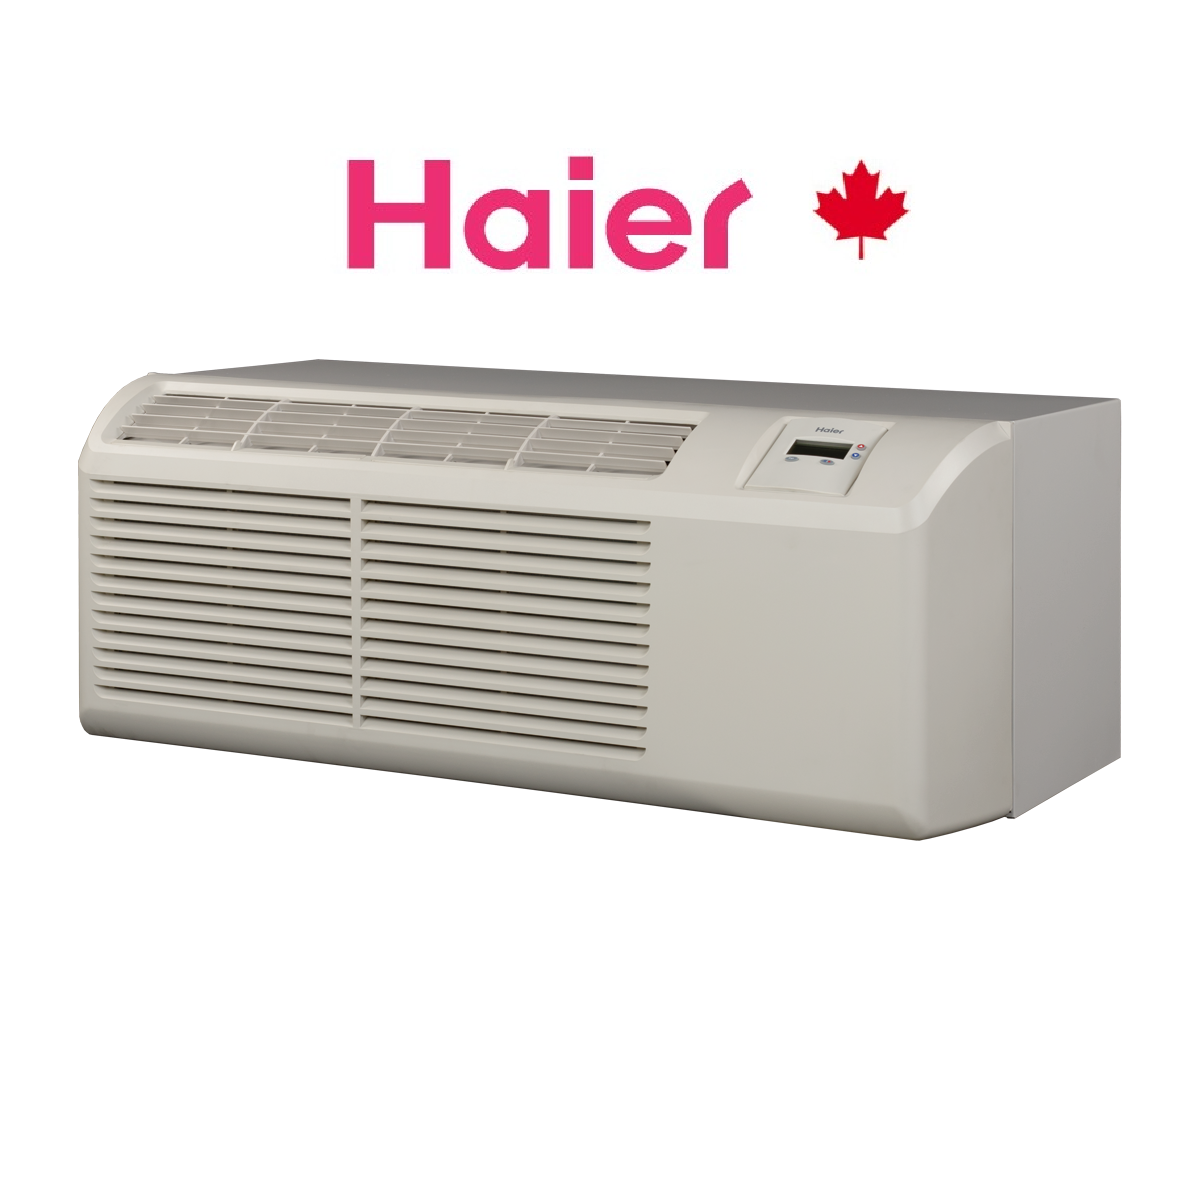 Haier PTCH0901UAC 9000 btu PTAC unit with Electric Heat 